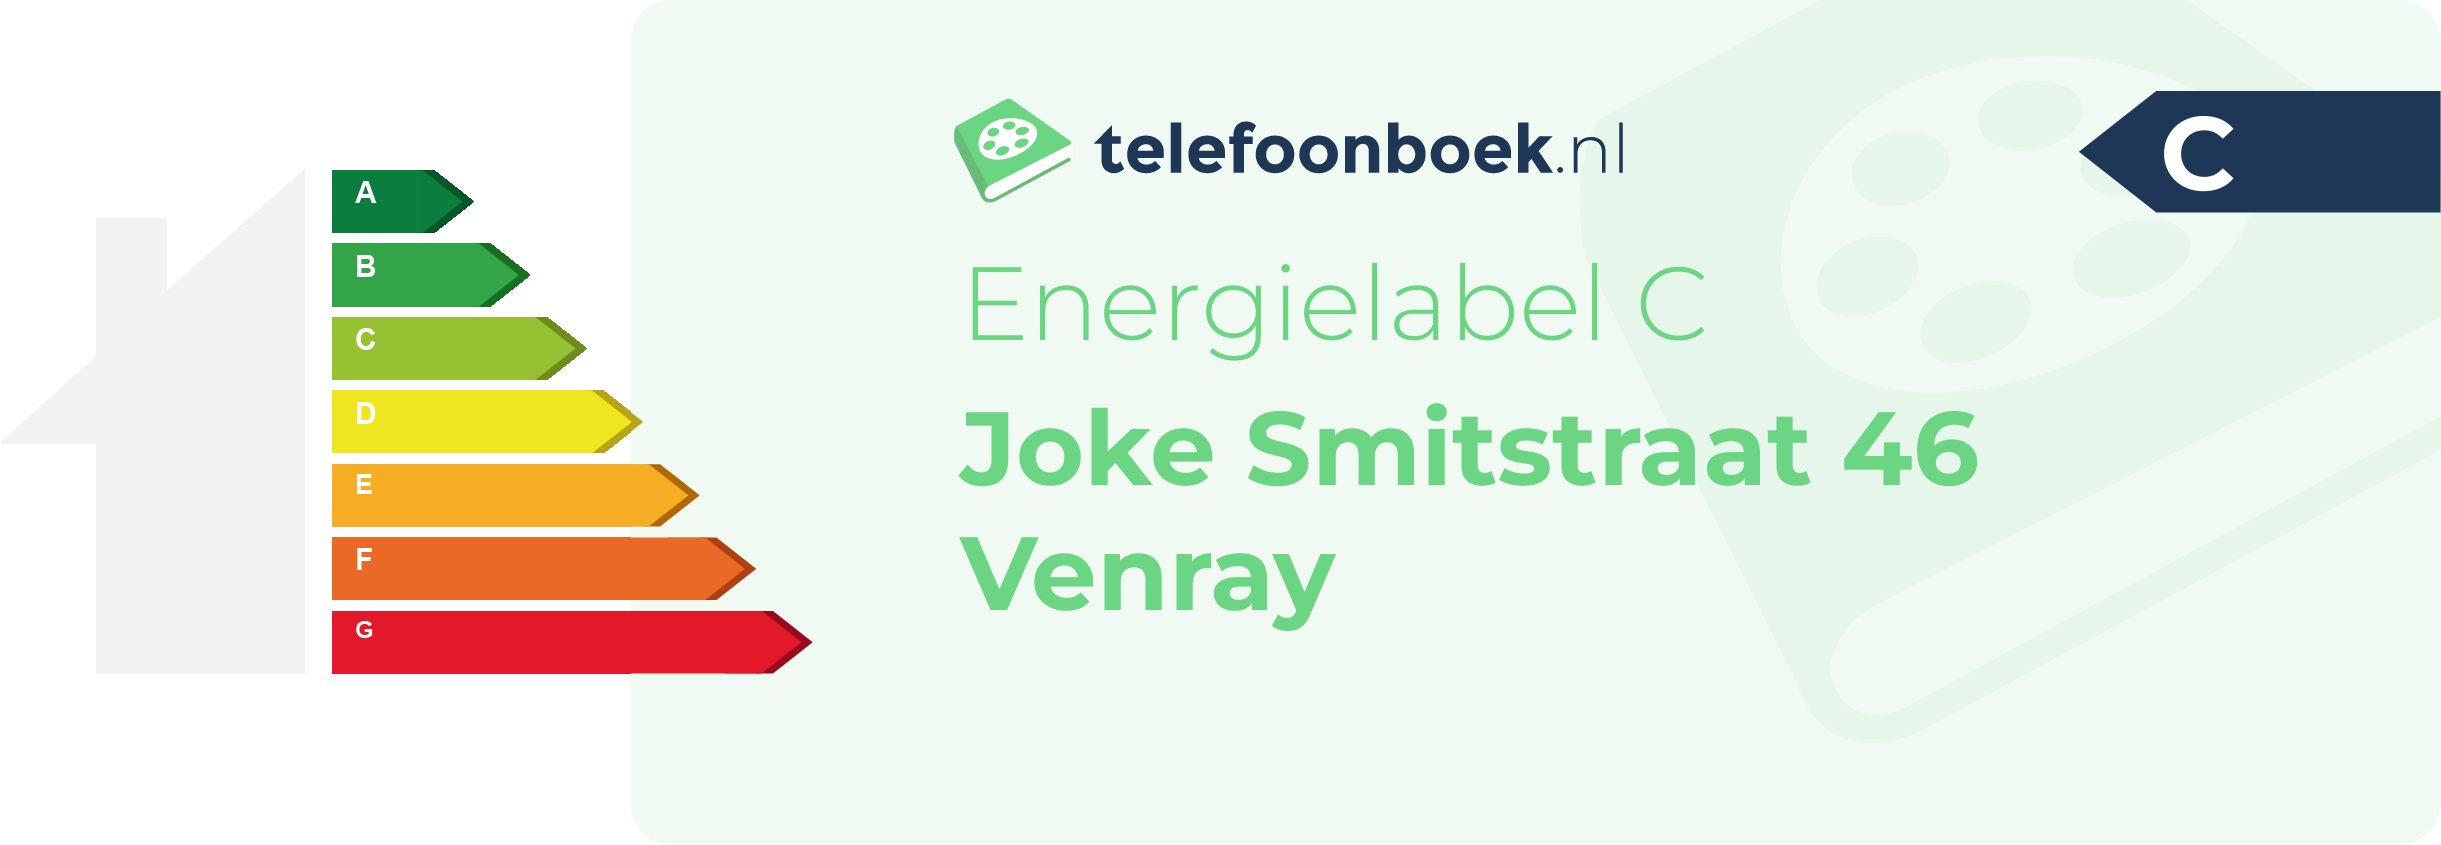 Energielabel Joke Smitstraat 46 Venray